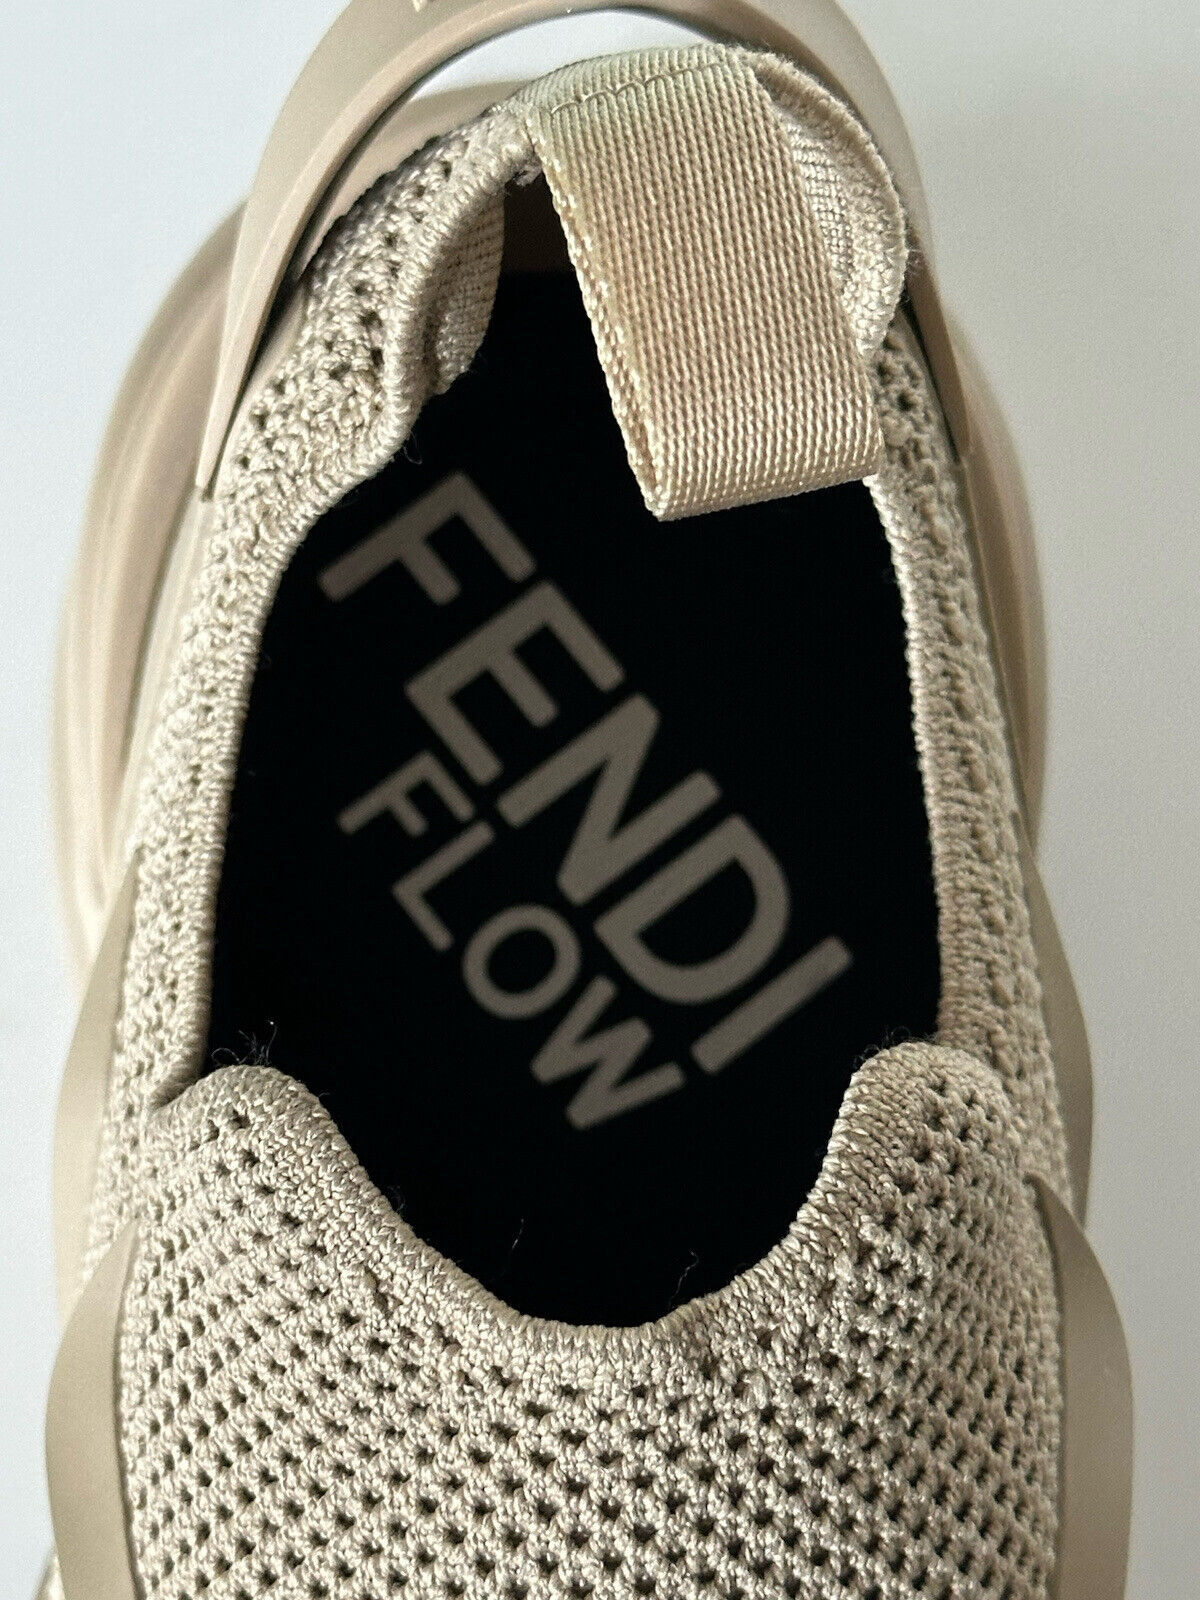 NIB 1050 Fendi Flow Men's Fabric Beige Sneakers 10 US (43 Euro) 7E1504 Italy